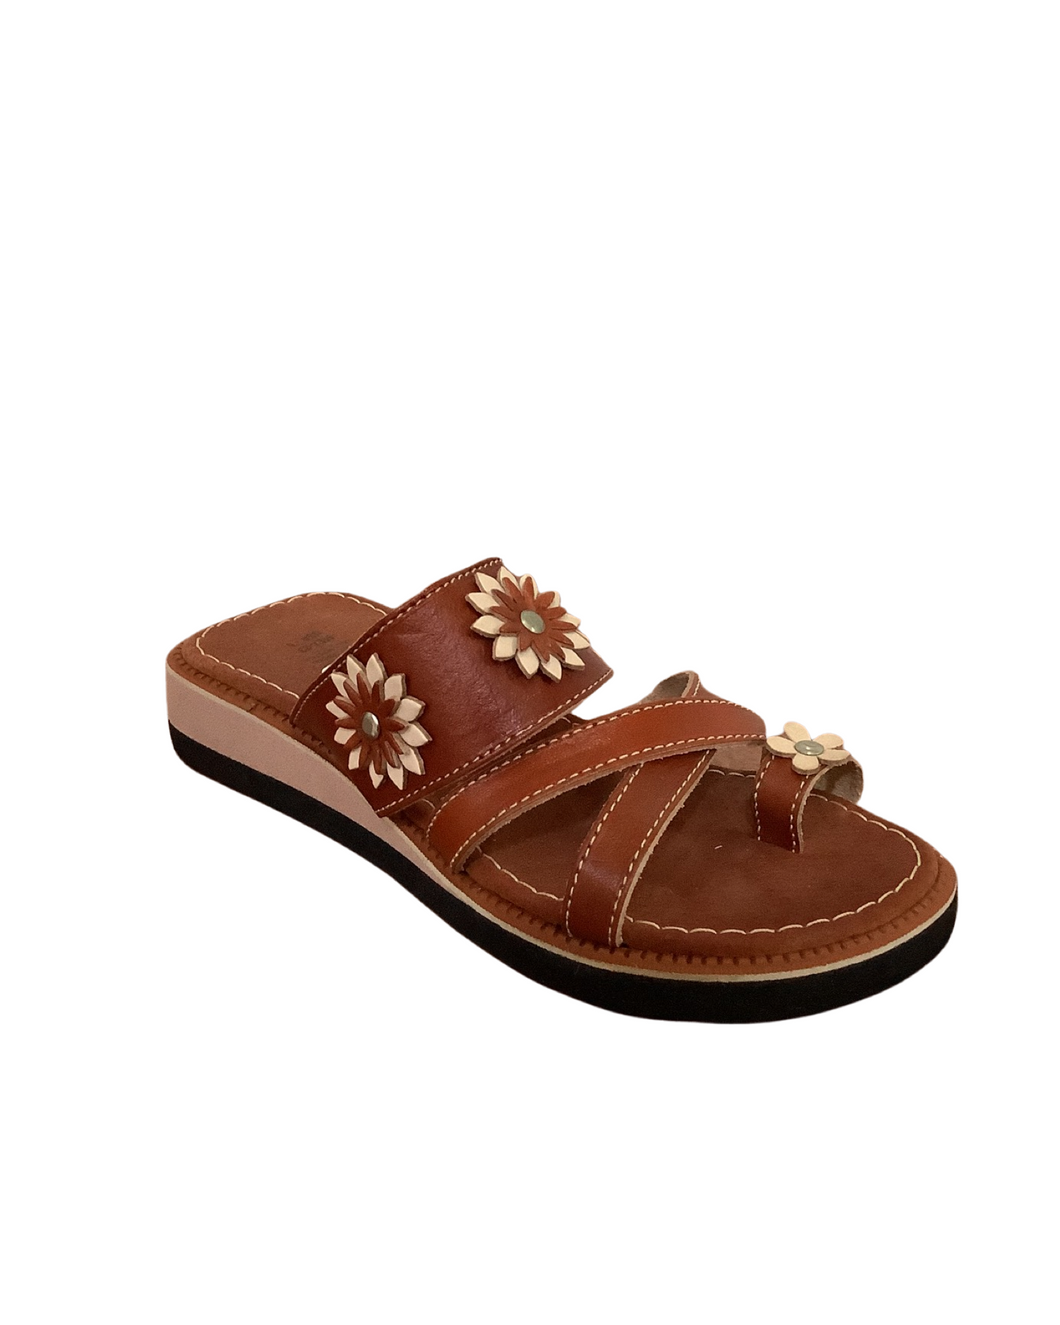 Importaciones Mexico 35107 Woman Leather sandals